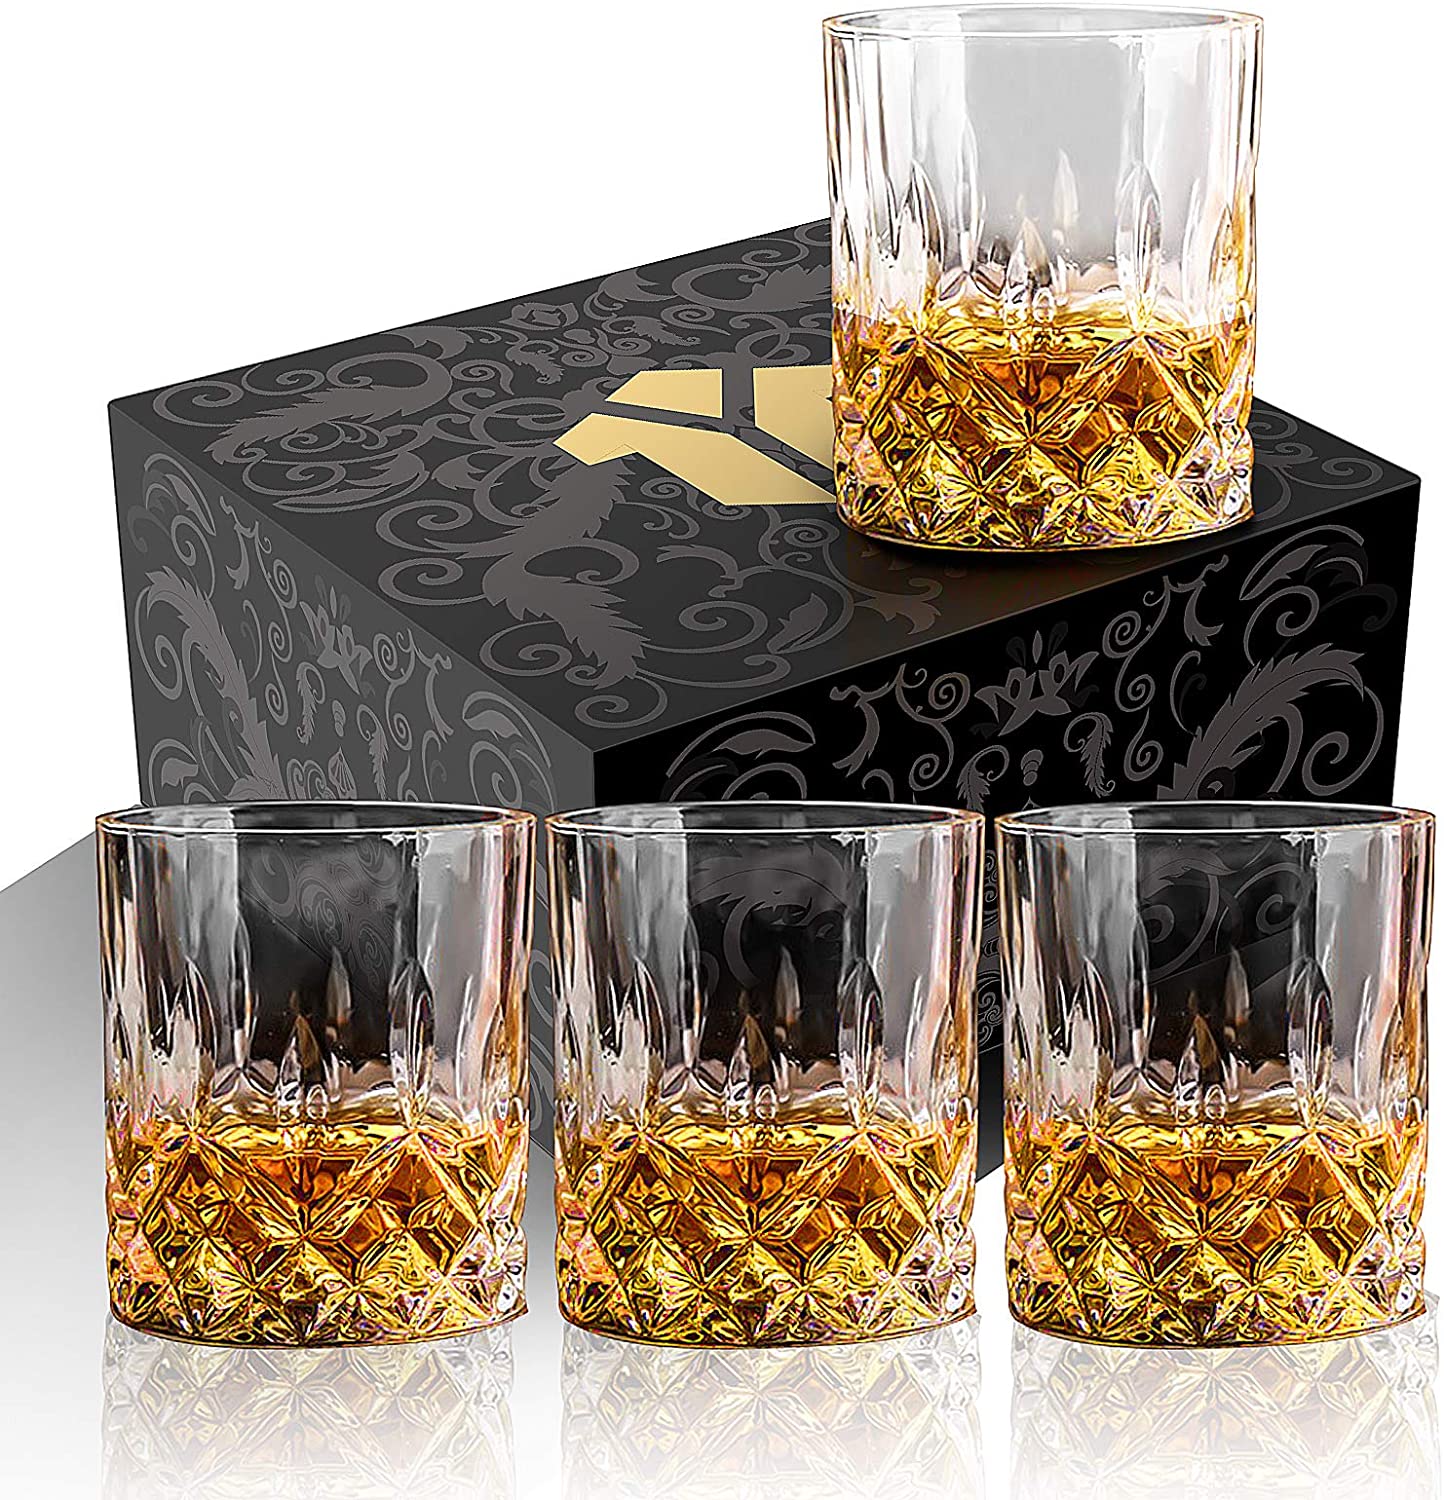 wholesale whiskey glasses old fashion wine glasses gift set by elegant gift box Featured Image